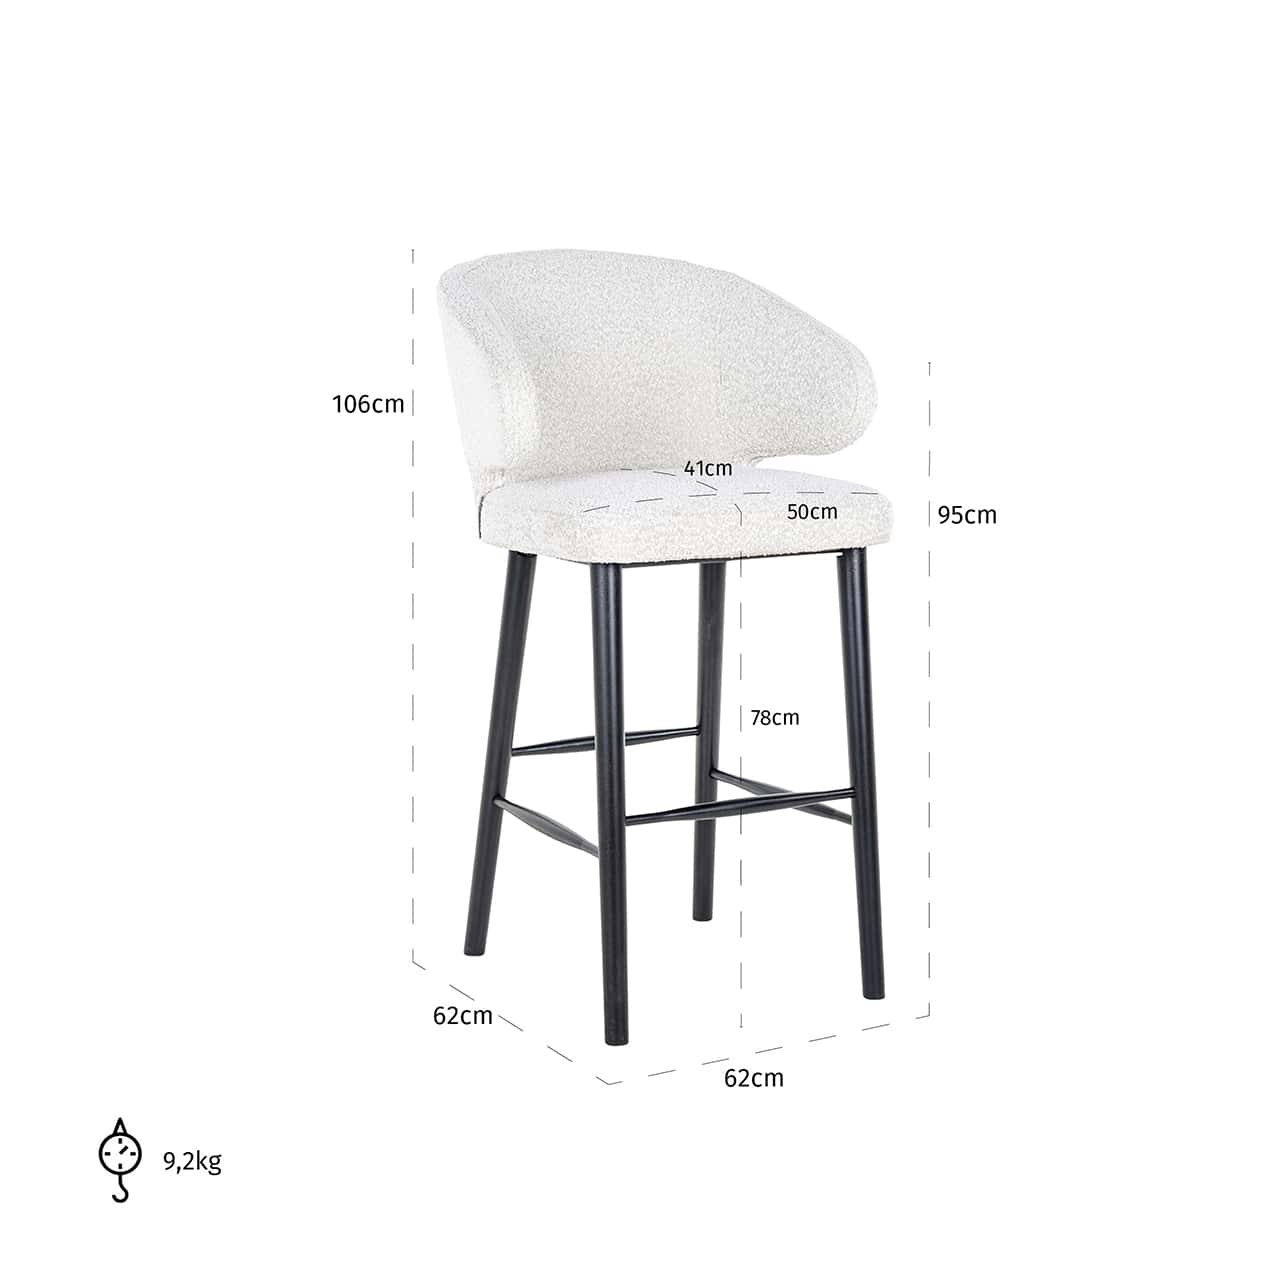 Bar stool Indigo white bouclé (Copenhagen 900 Bouclé White)